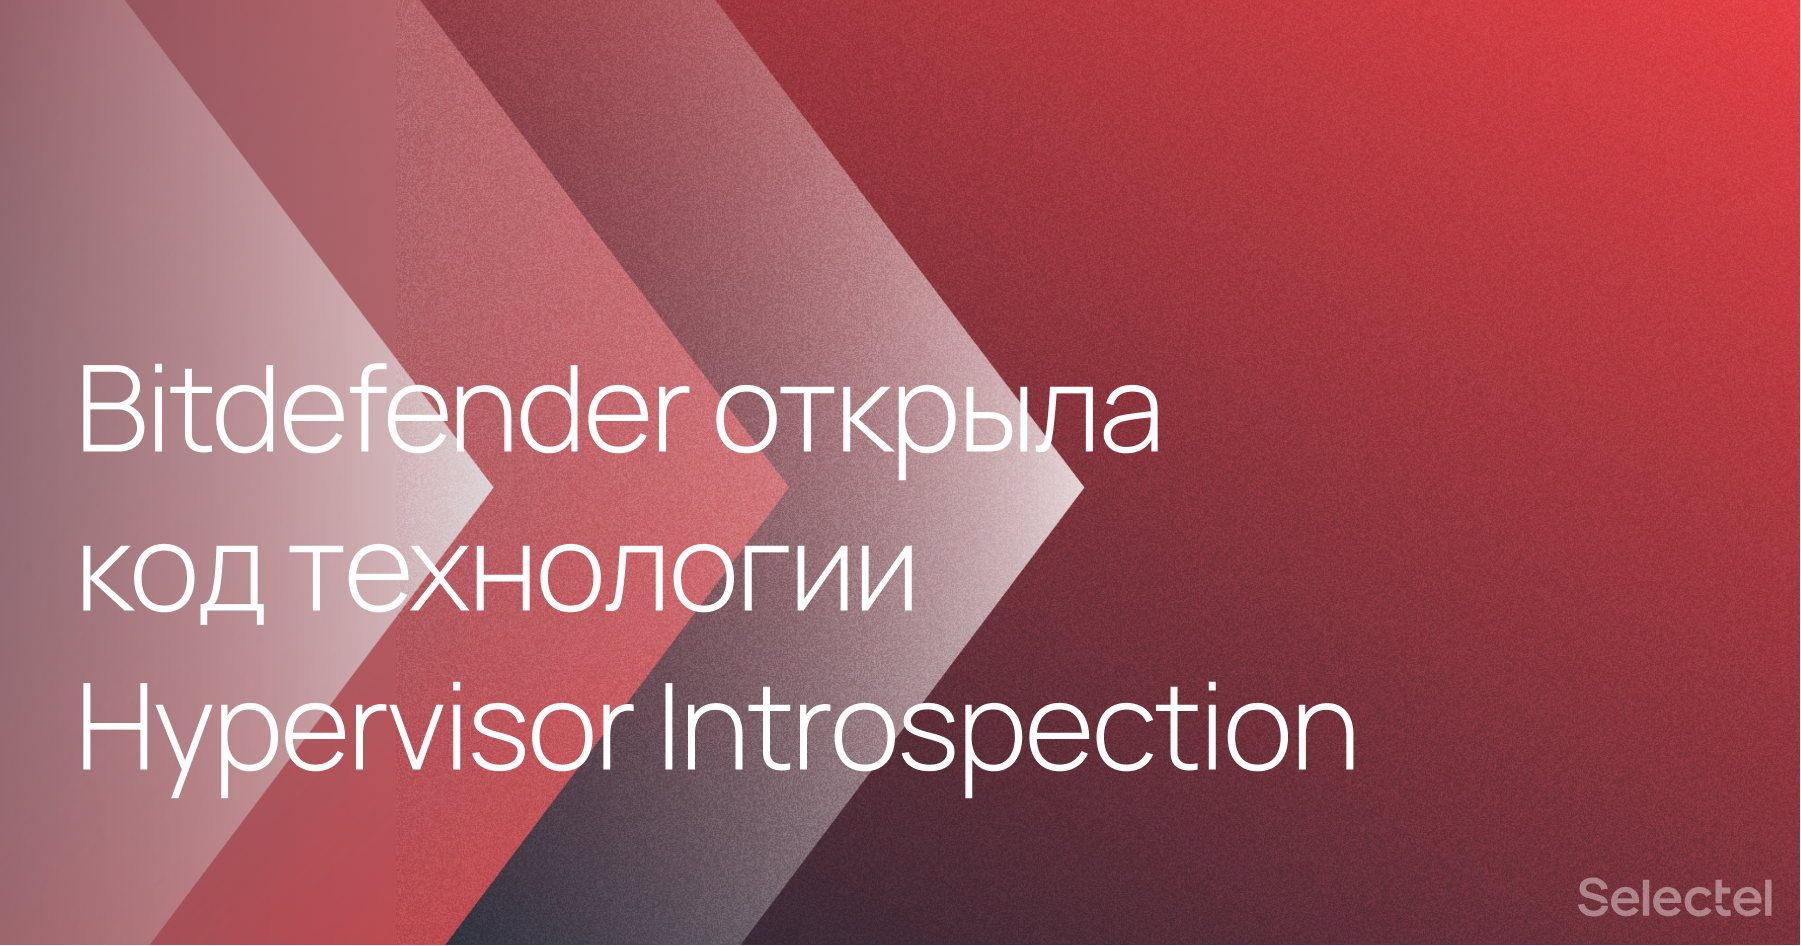 Bitdefender открыла код технологии интроспекции гипервизора HVI